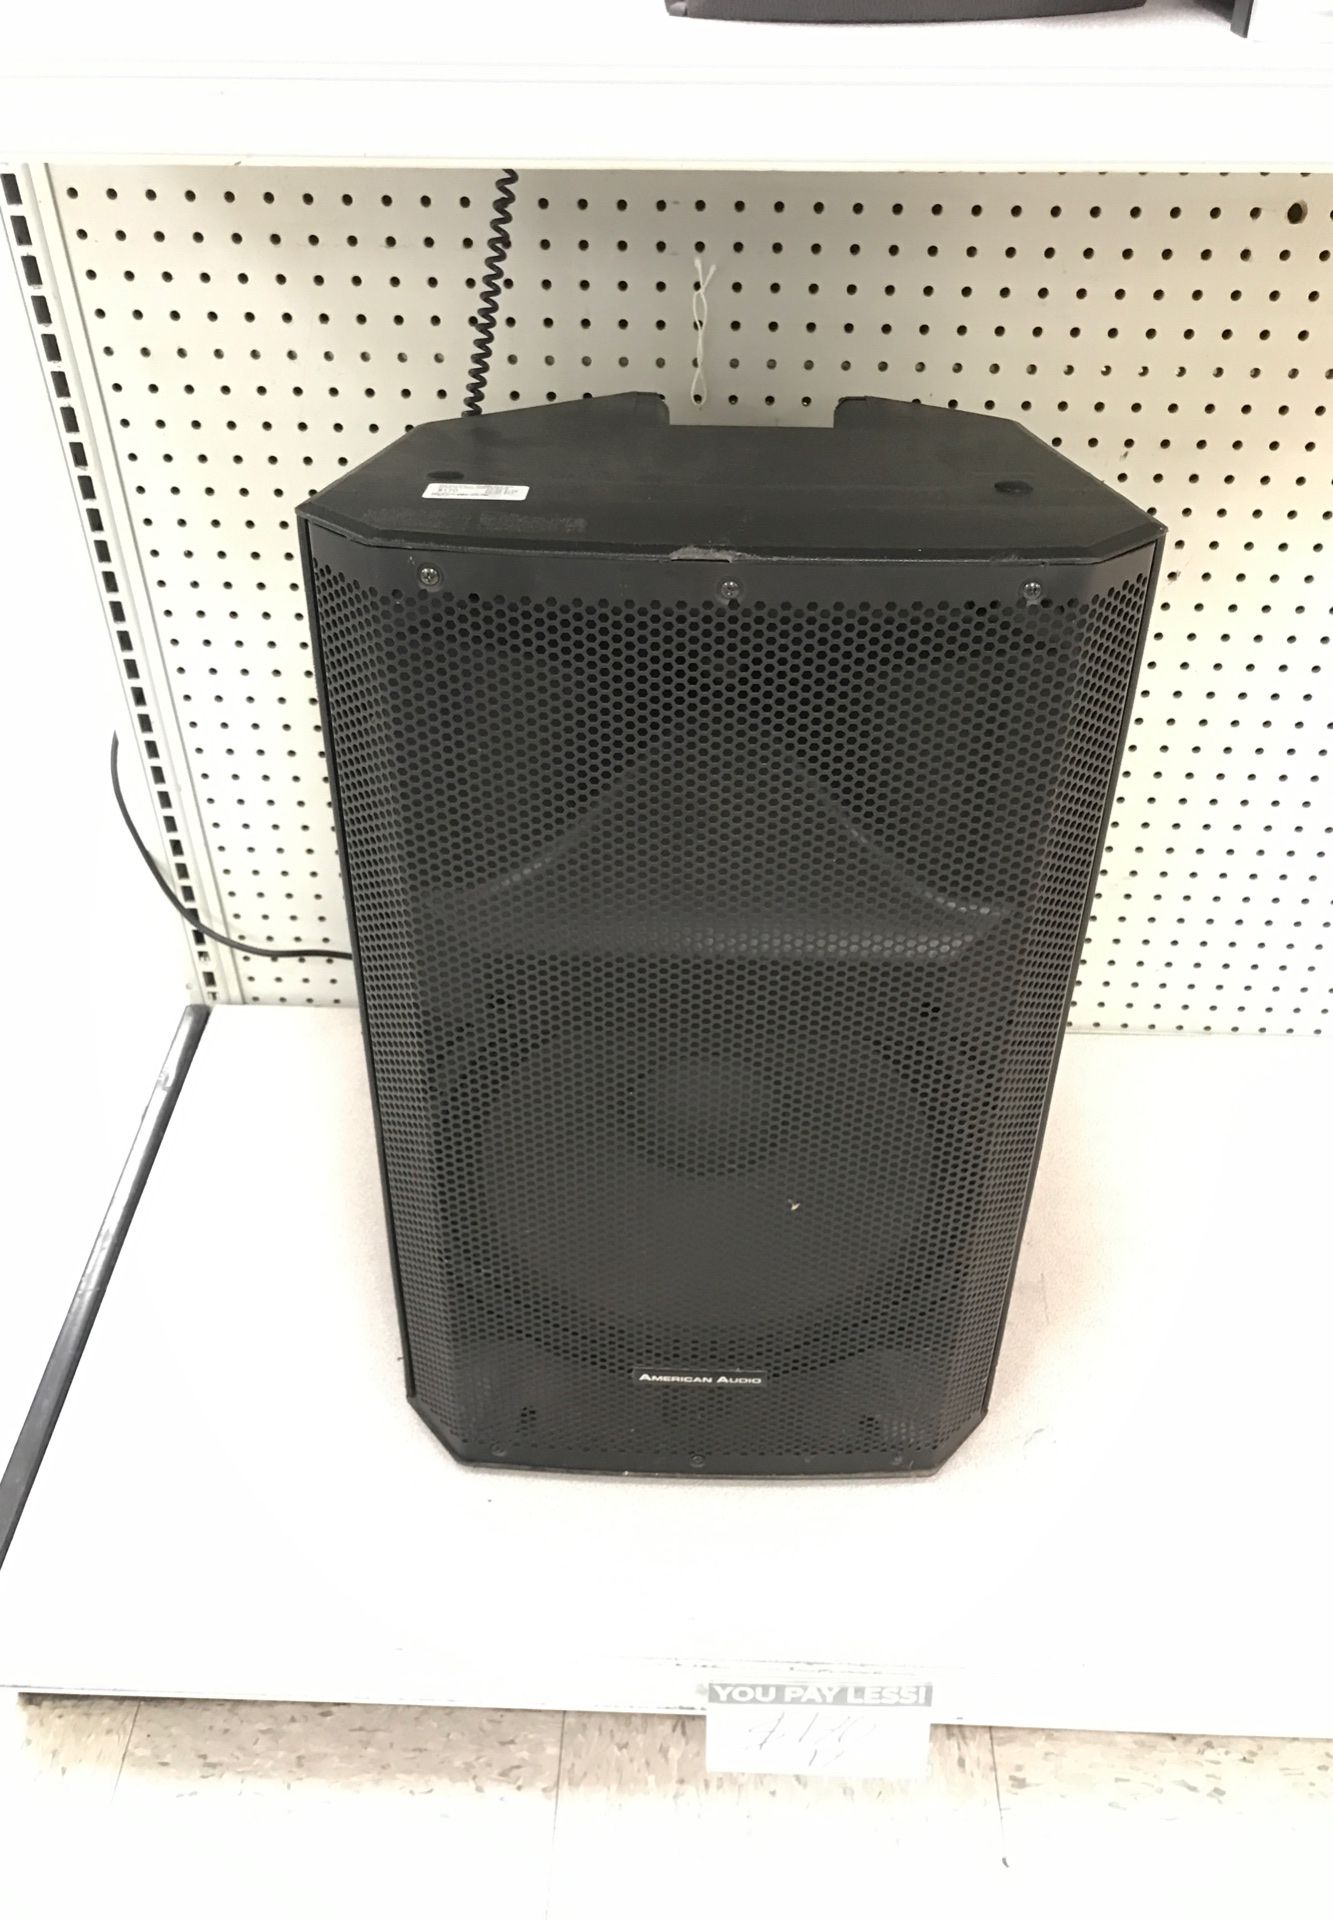 American audio bluetooth speaker for sale